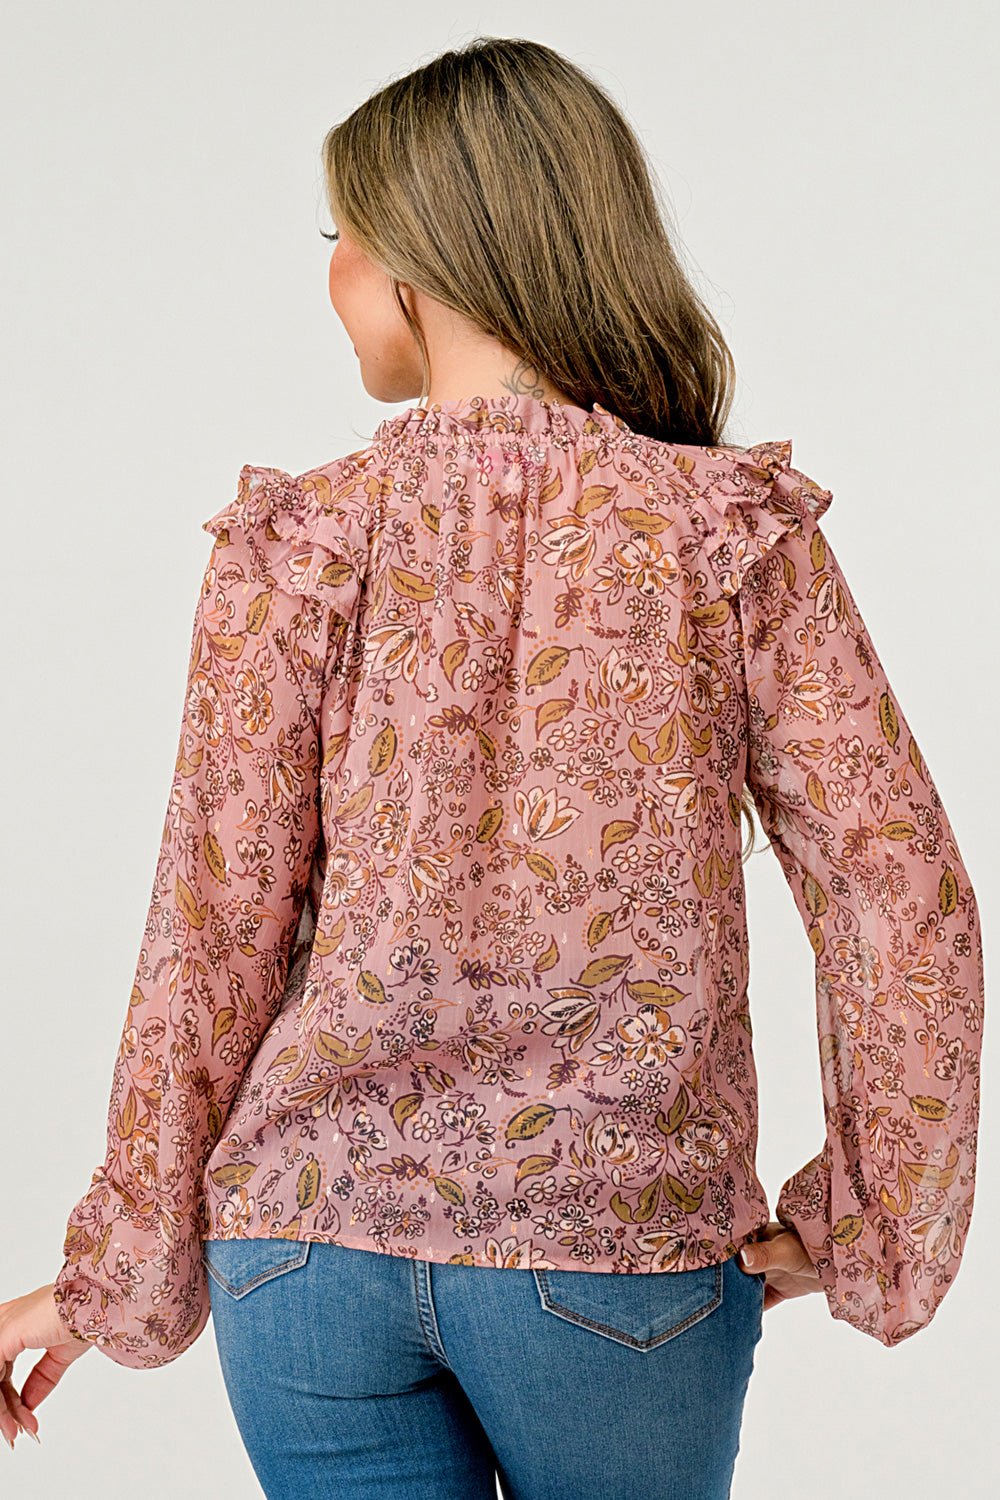 Floral Jana Long Sleeve Top - DressbarnShirts & Blouses